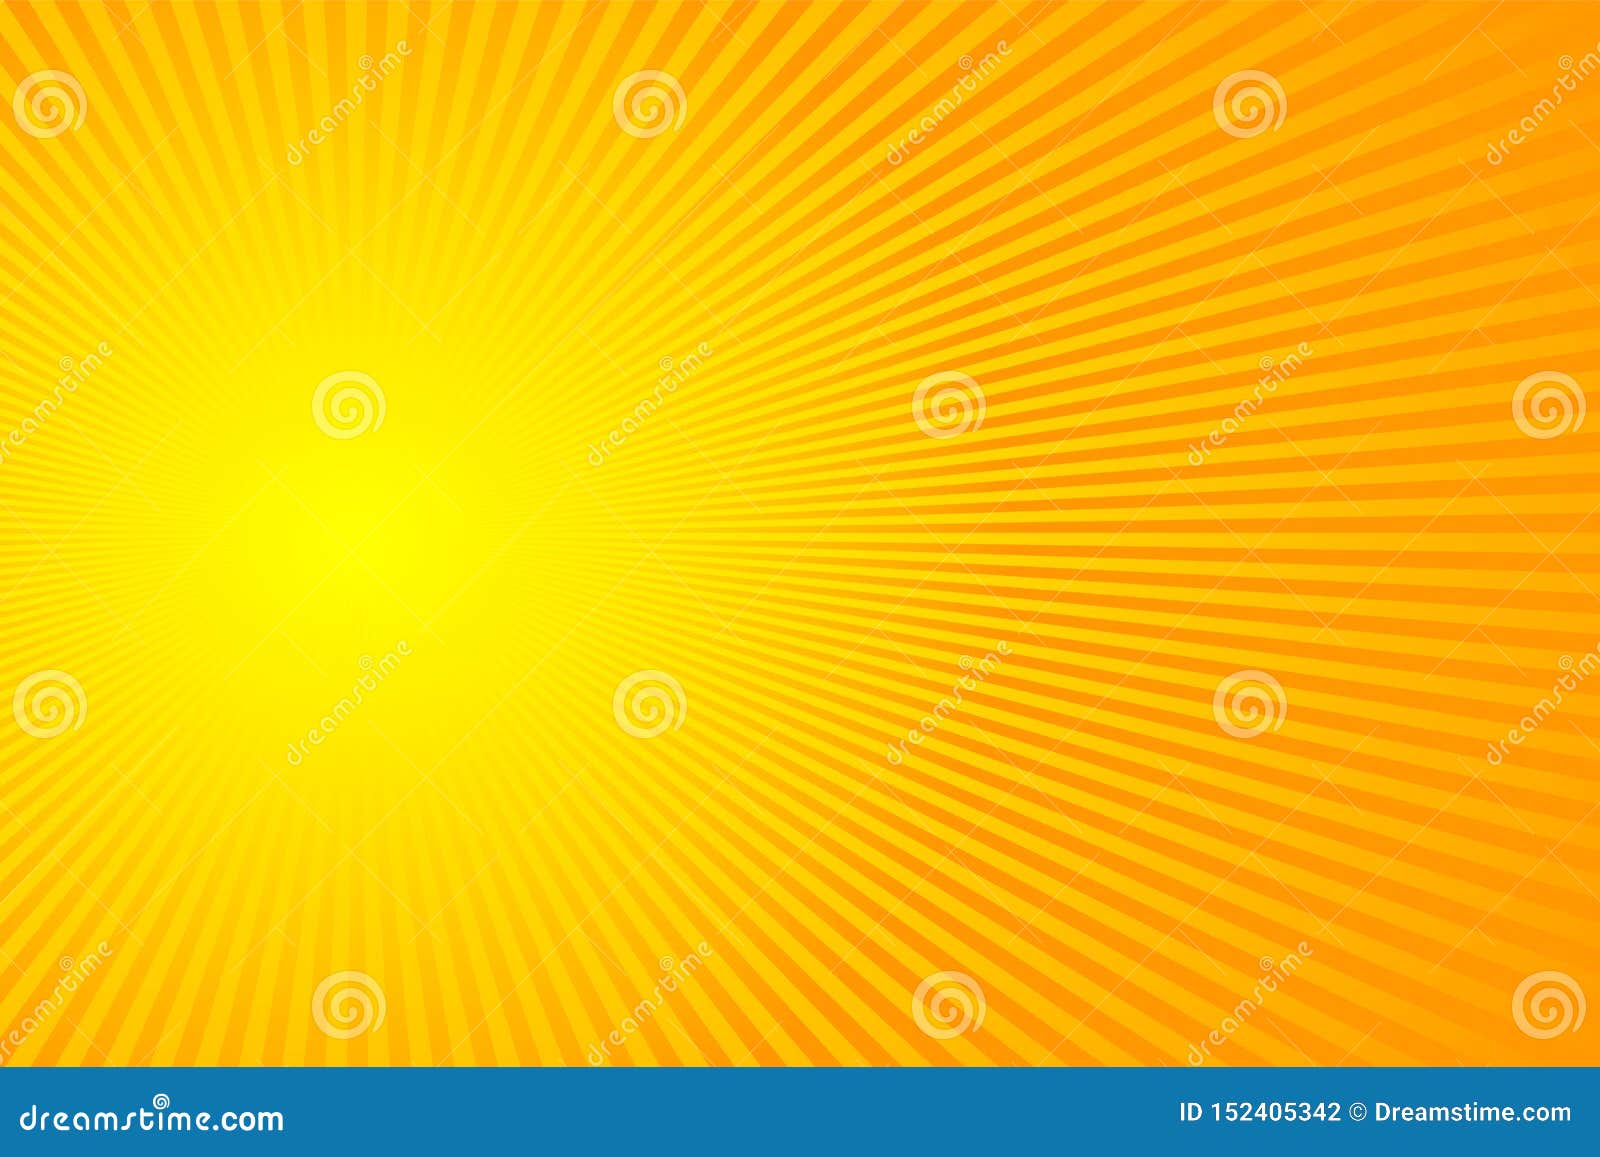 Sun Rays Sunburst On Yellow And Orange Color Background Vector Illustration Summer Background Design Stock Vector Illustration Of Concept Shiny